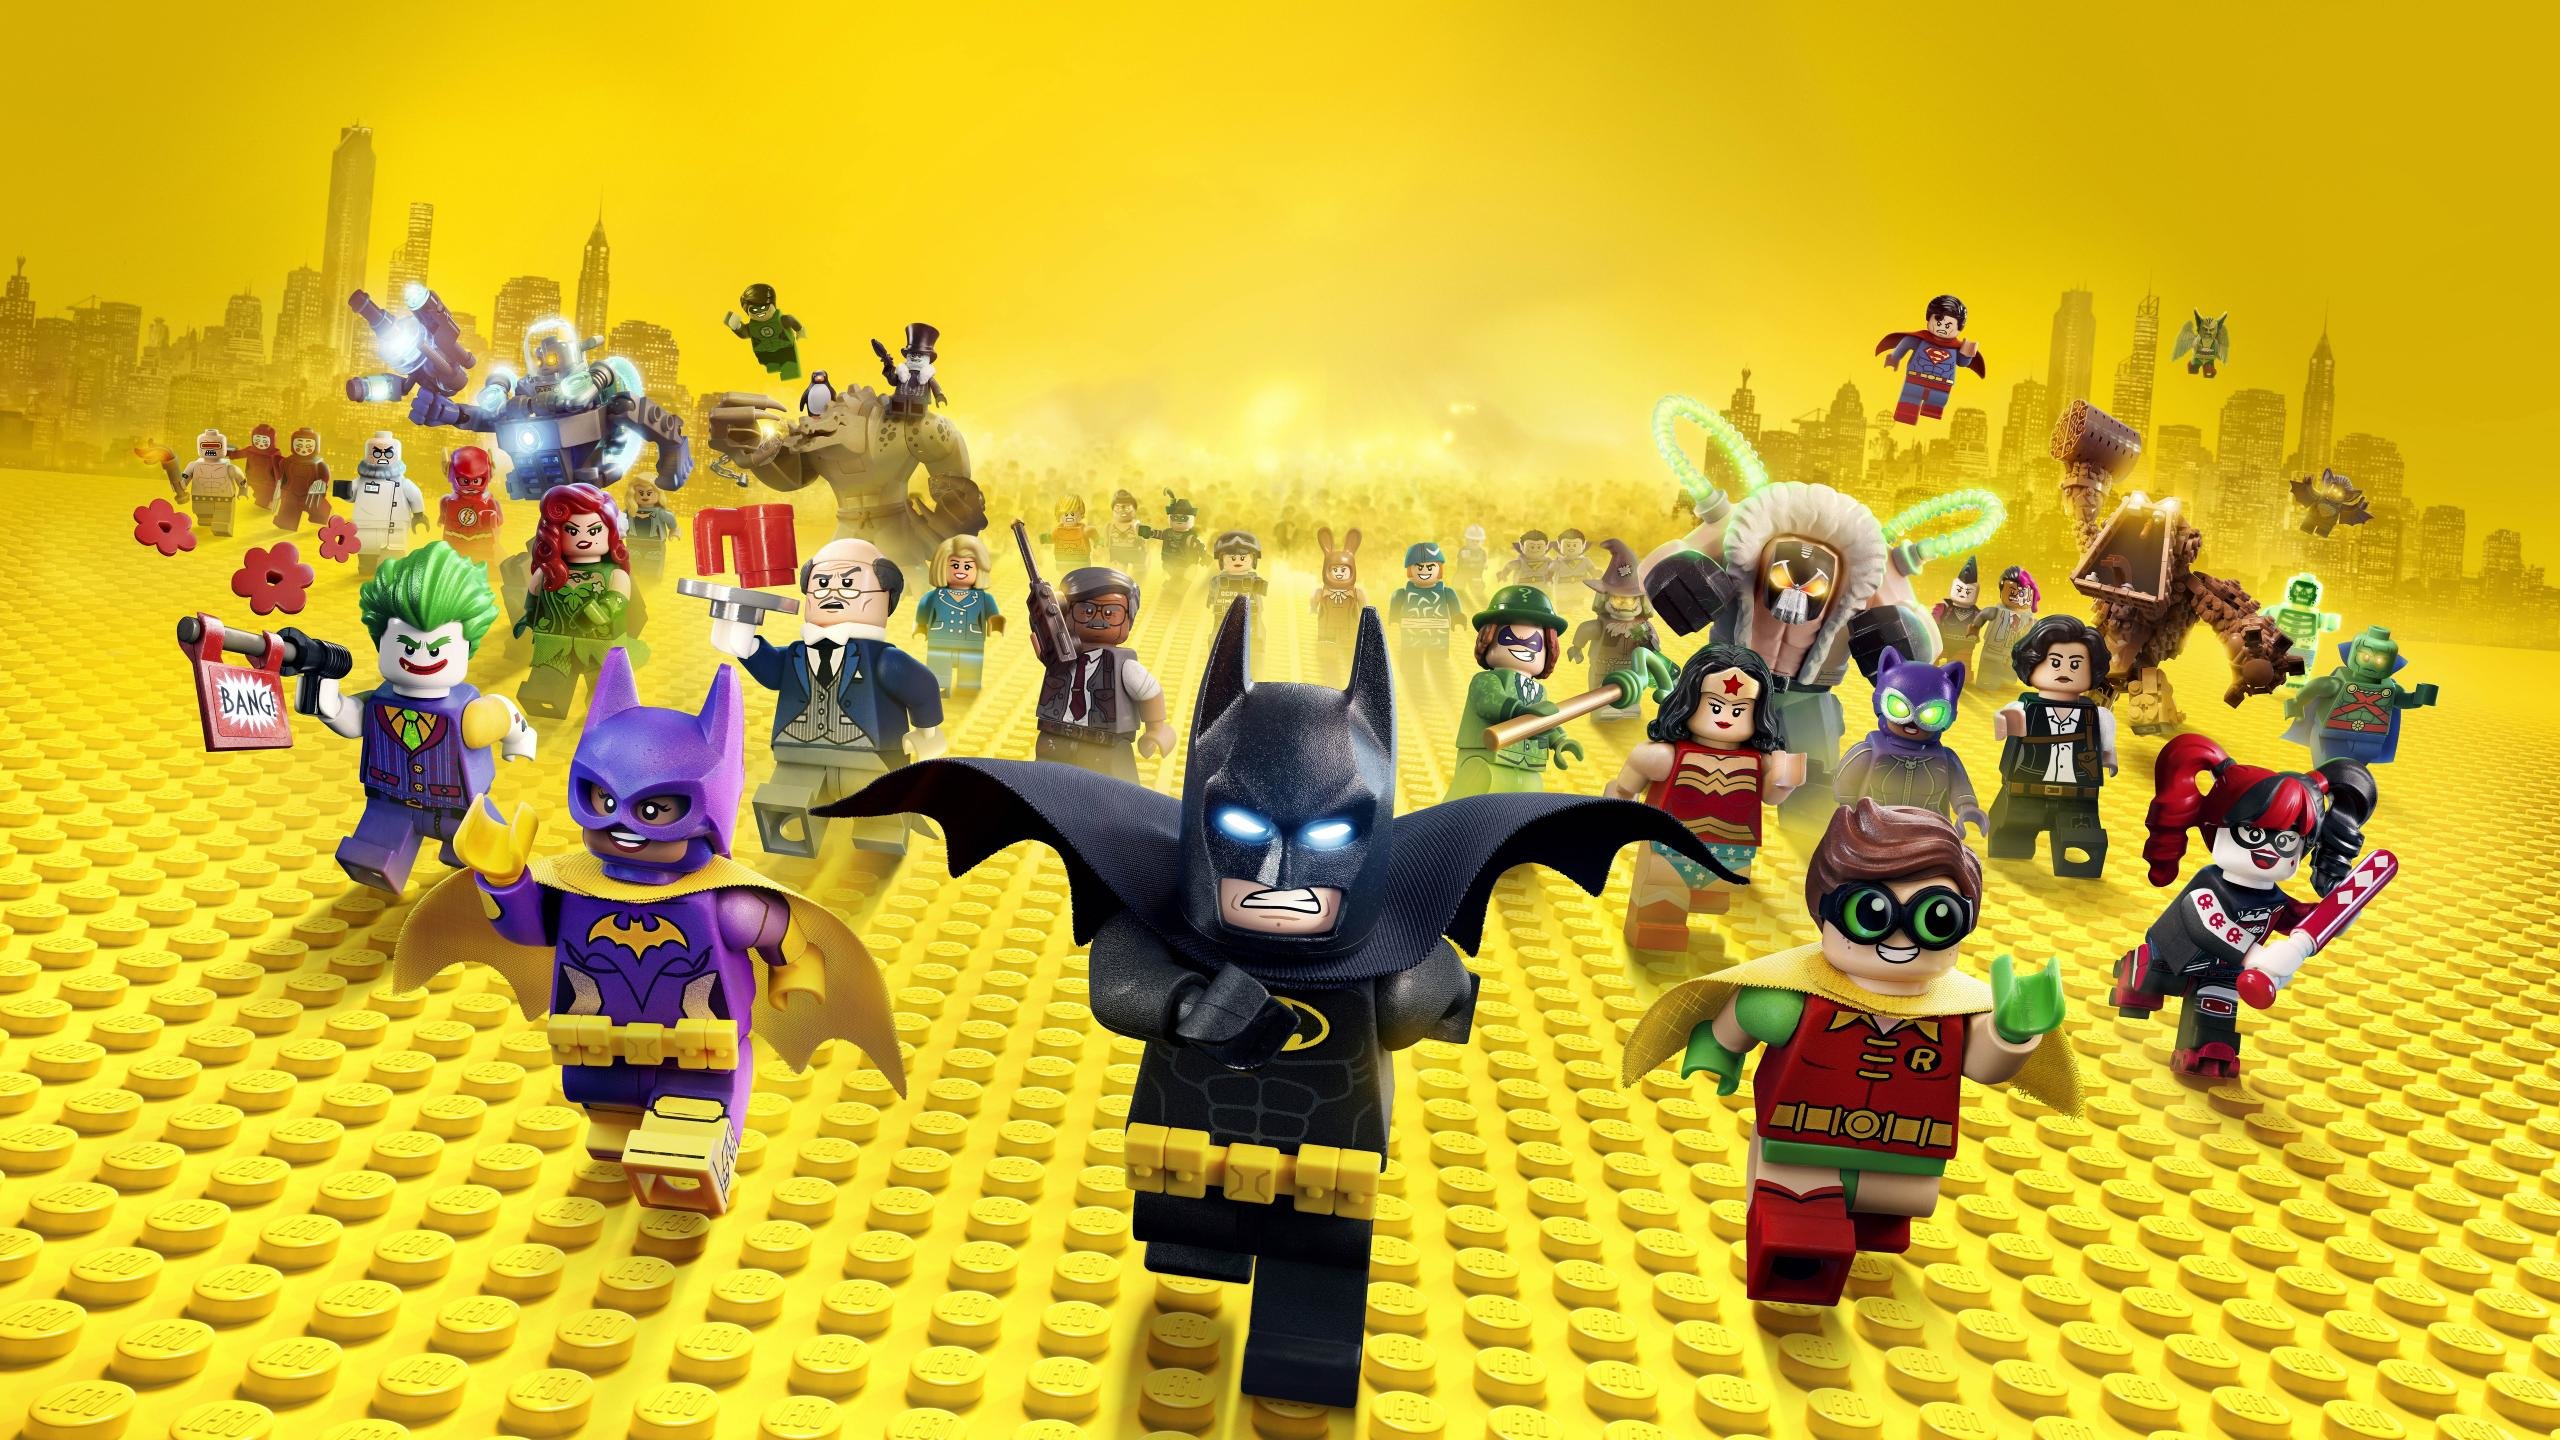 Download hd 2560x1440 Lego batman PC background ID:84597 for free